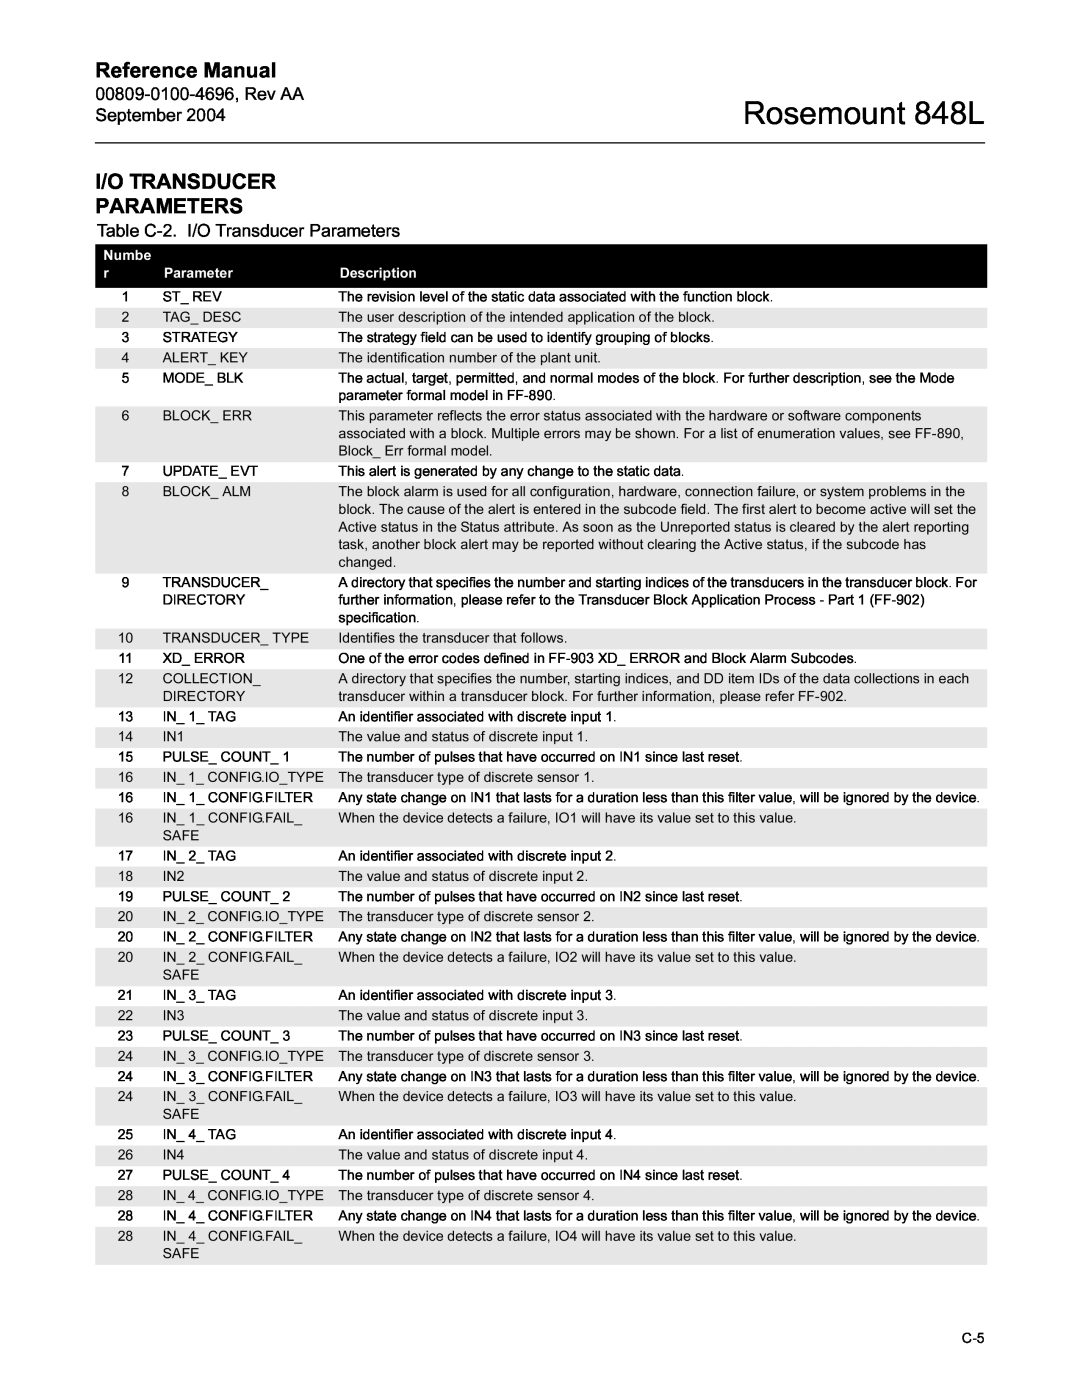 Emerson manual I/O Transducer Parameters, Rosemount 848L, Reference Manual, 00809-0100-4696,Rev AA September 